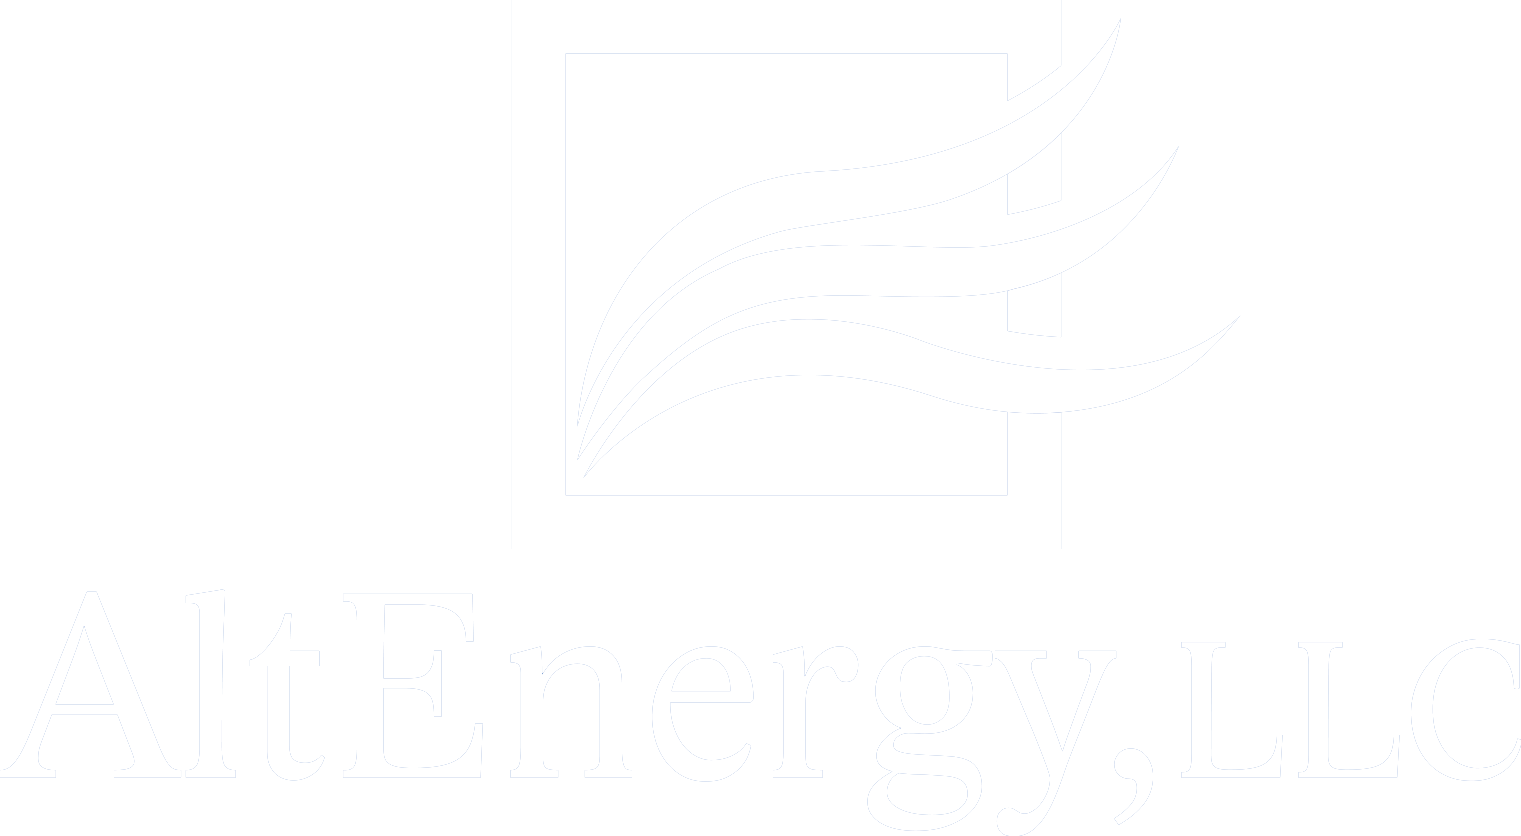 AltEnergy, LLC